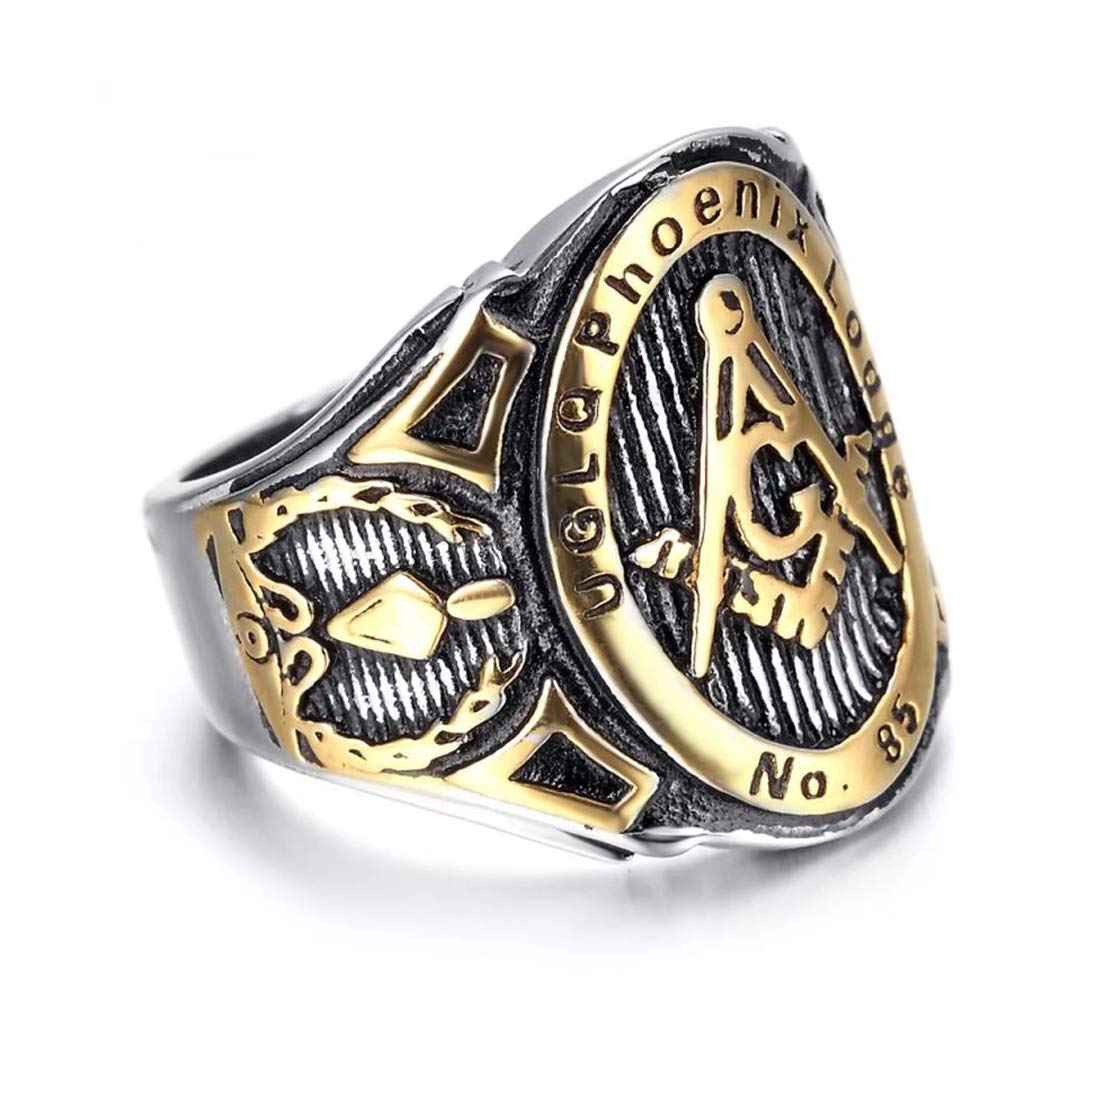 Yellow Chimes Vintage AG Masonic Logo Religious Freemason Symbol with Phoenix Engraved Stainless Steel Ring for Men & Boys